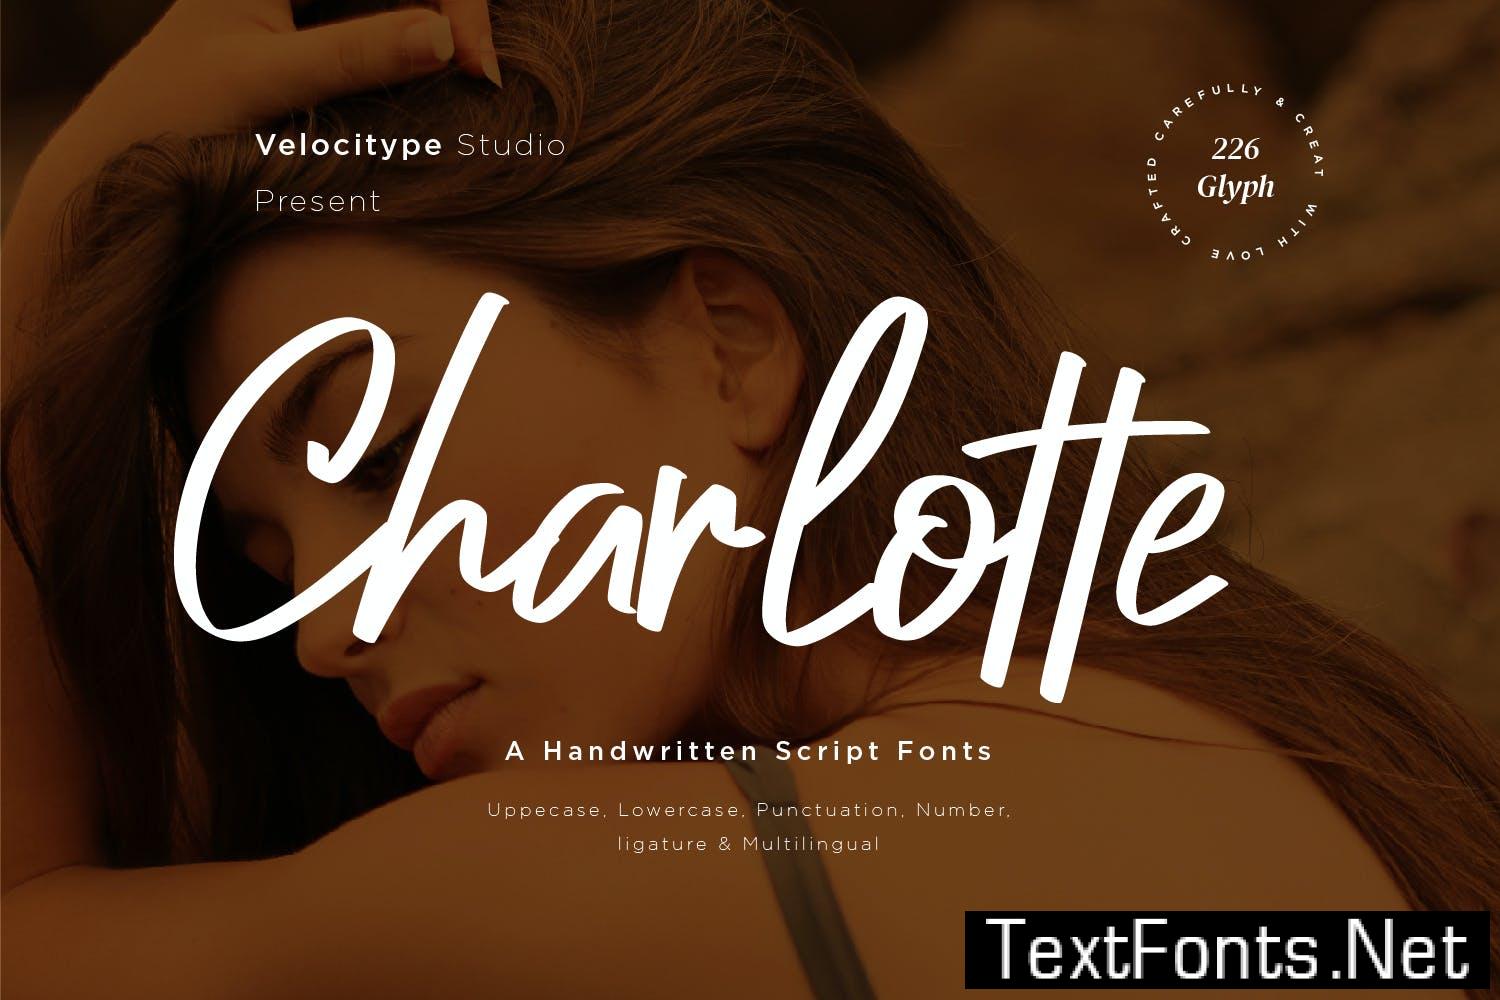 charlotte script font free